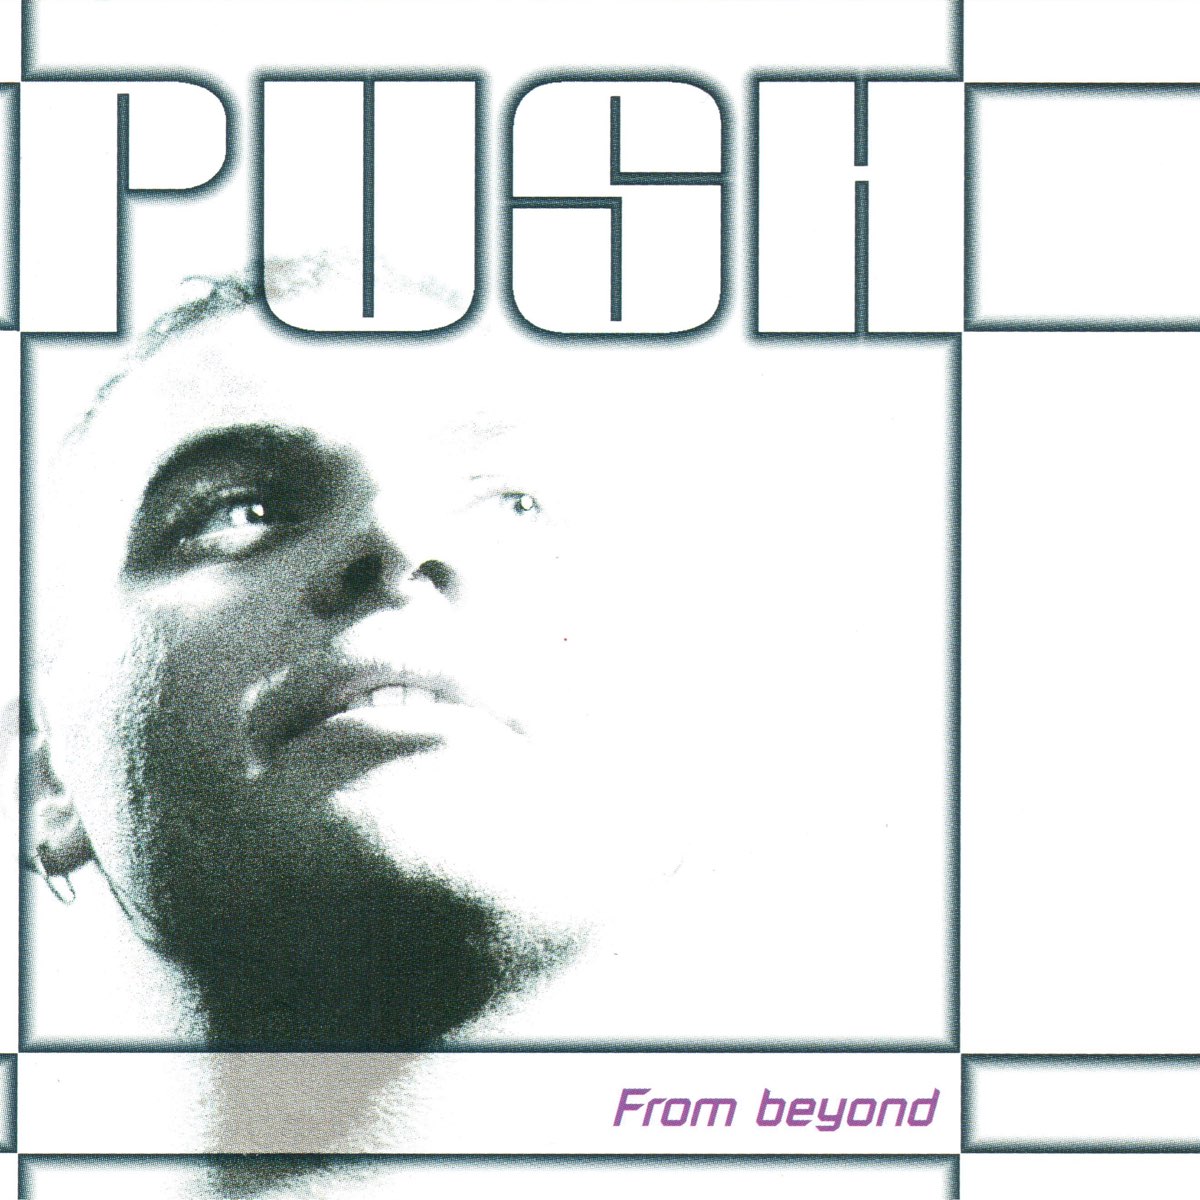 Pushing again. Push - from Beyond. Push - the Legacy. Electro Pusher. Mike Push albums.